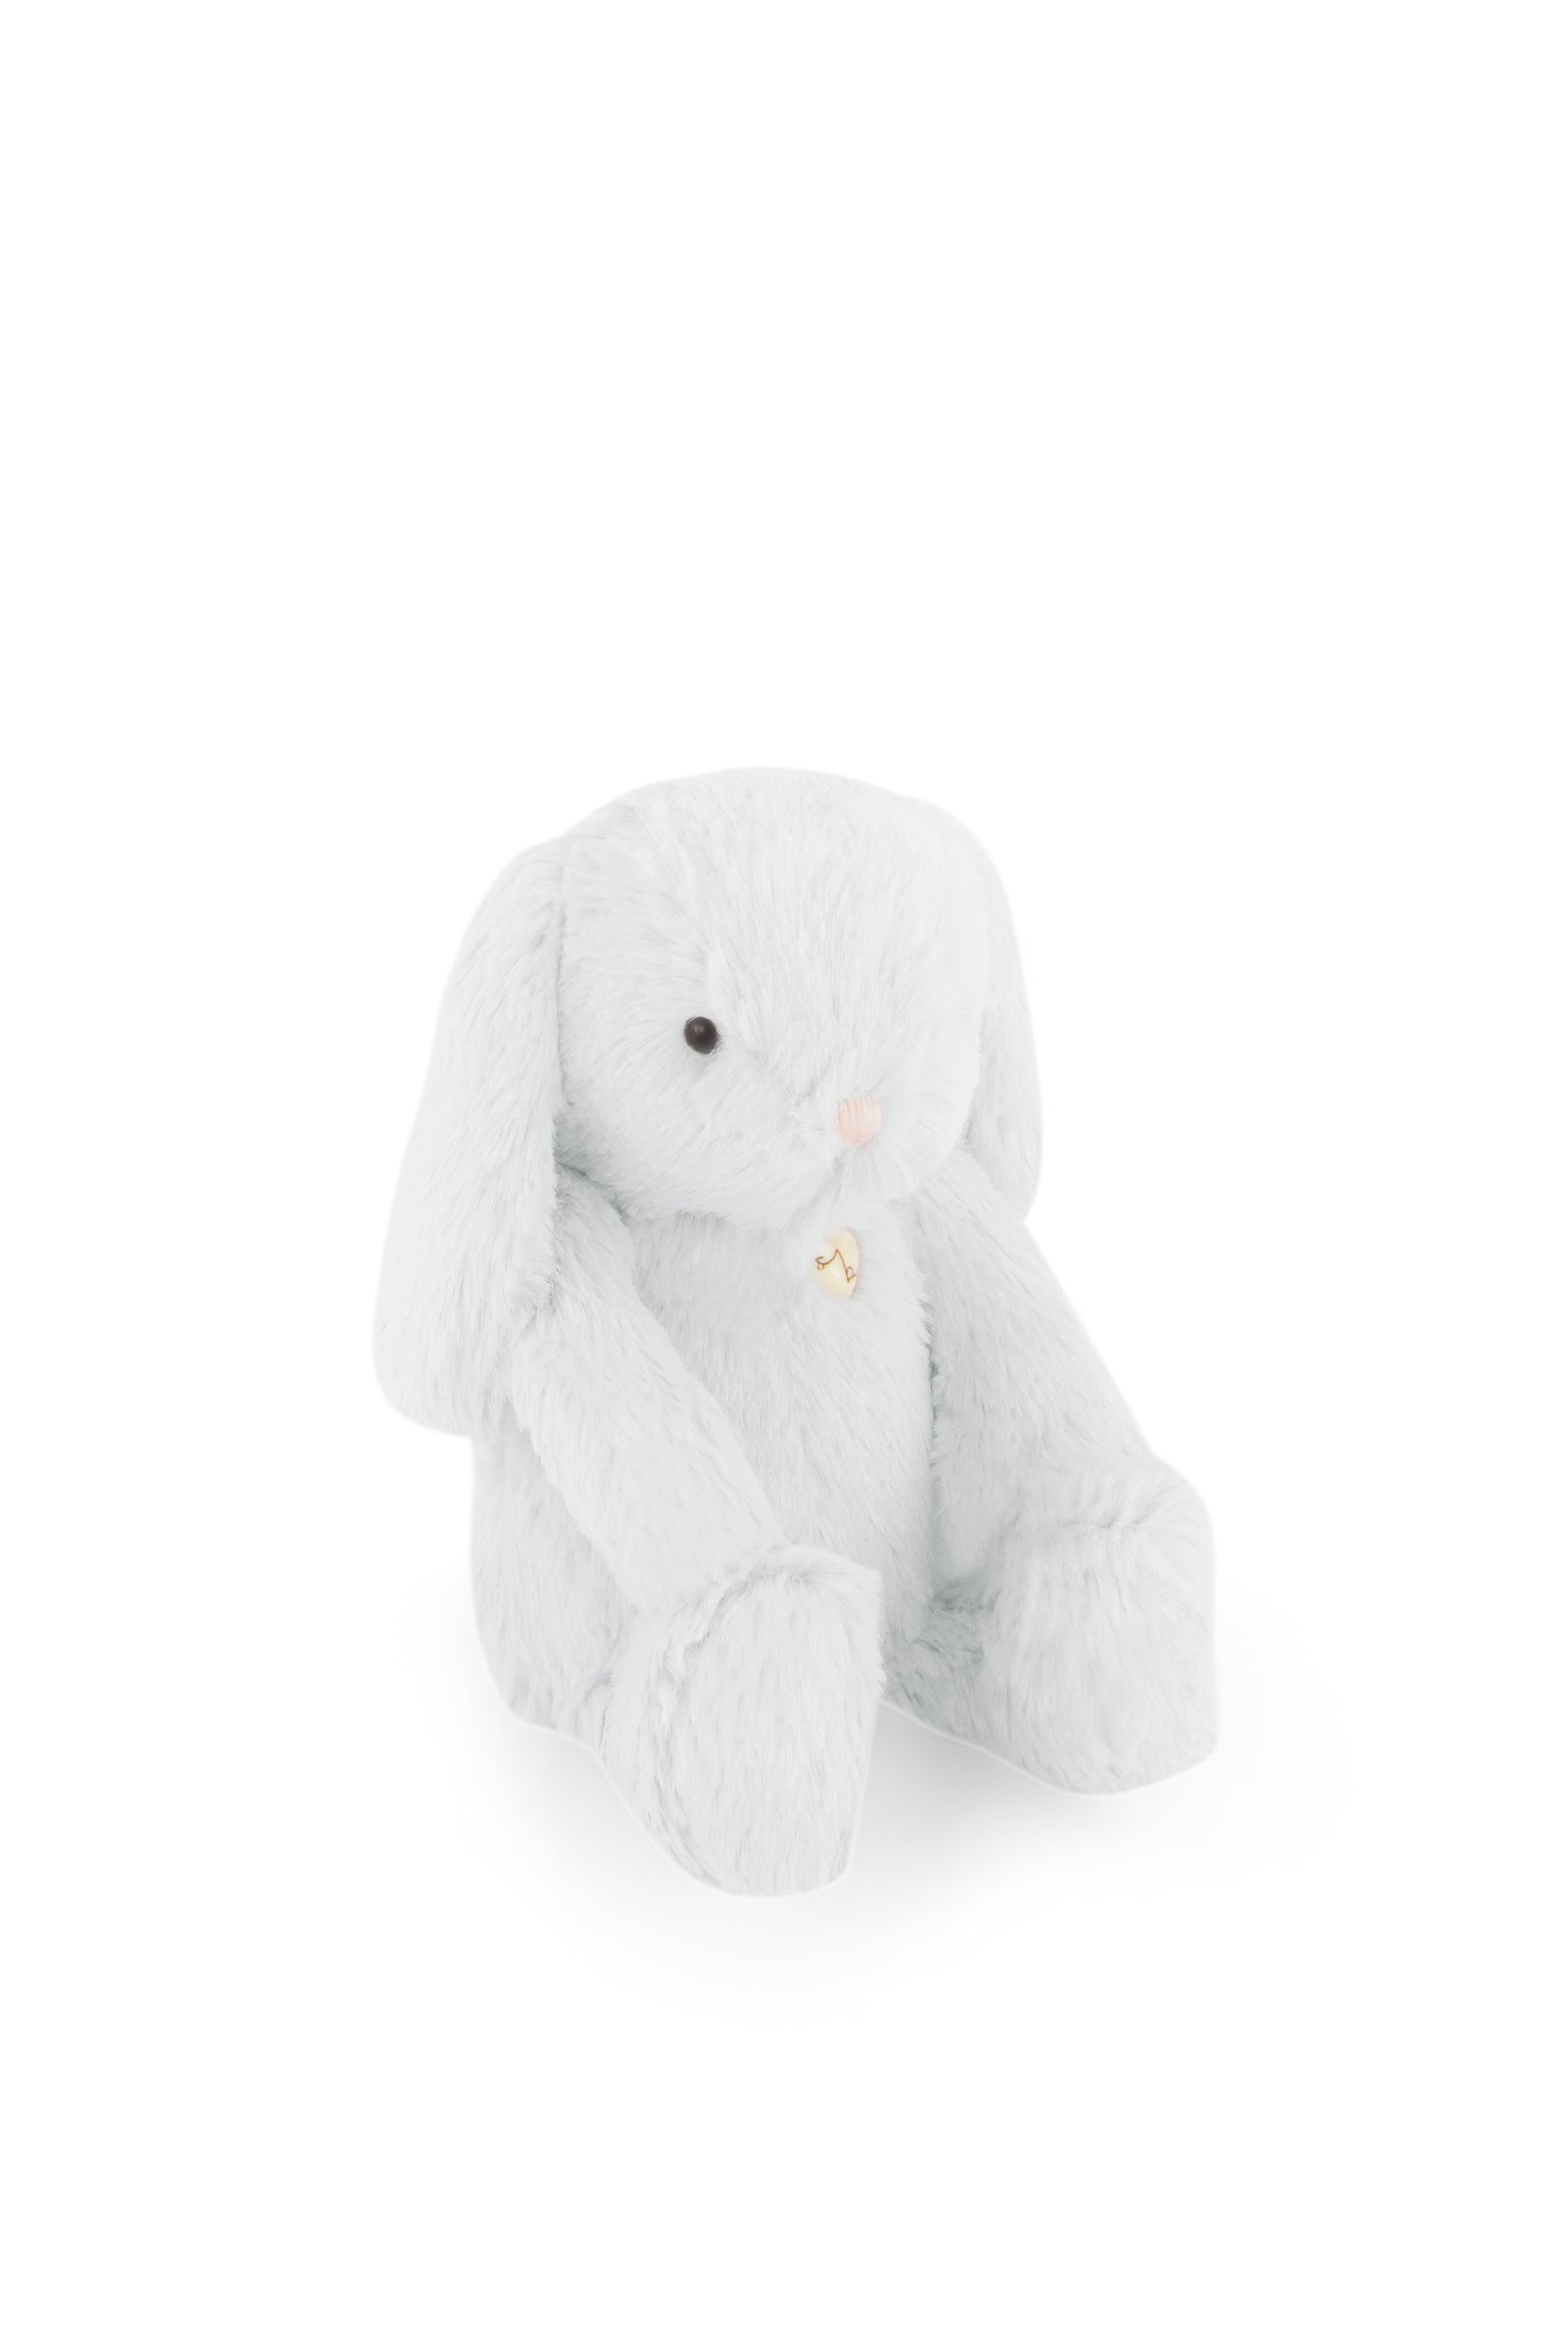 Snuggle Bunnies | Penelope the Bunny | Moonbeam